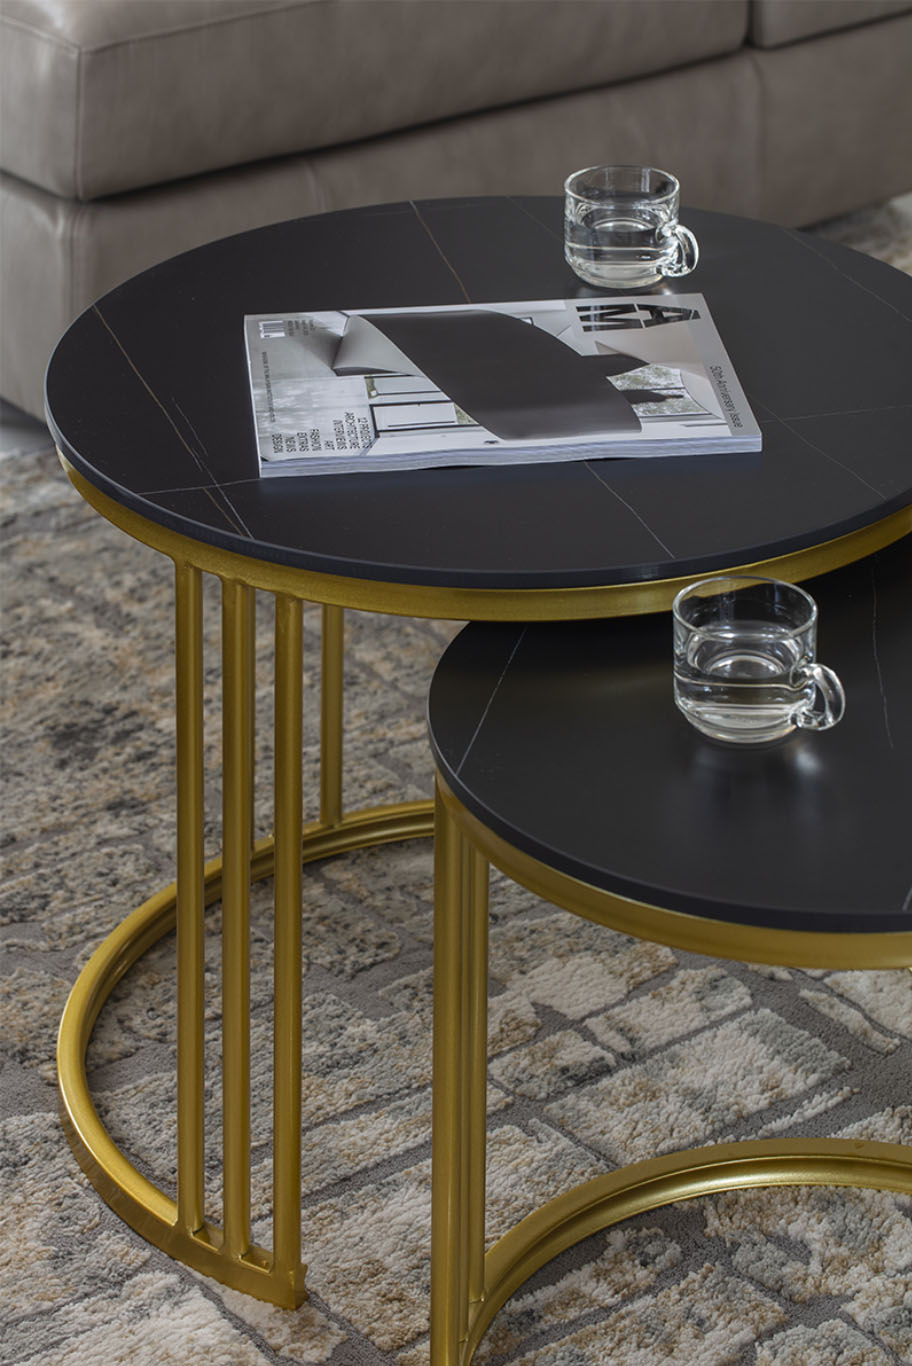 MIEUX La Famillie De Lee round black marble overlap mini coffee table with gold color stand mieux interior design